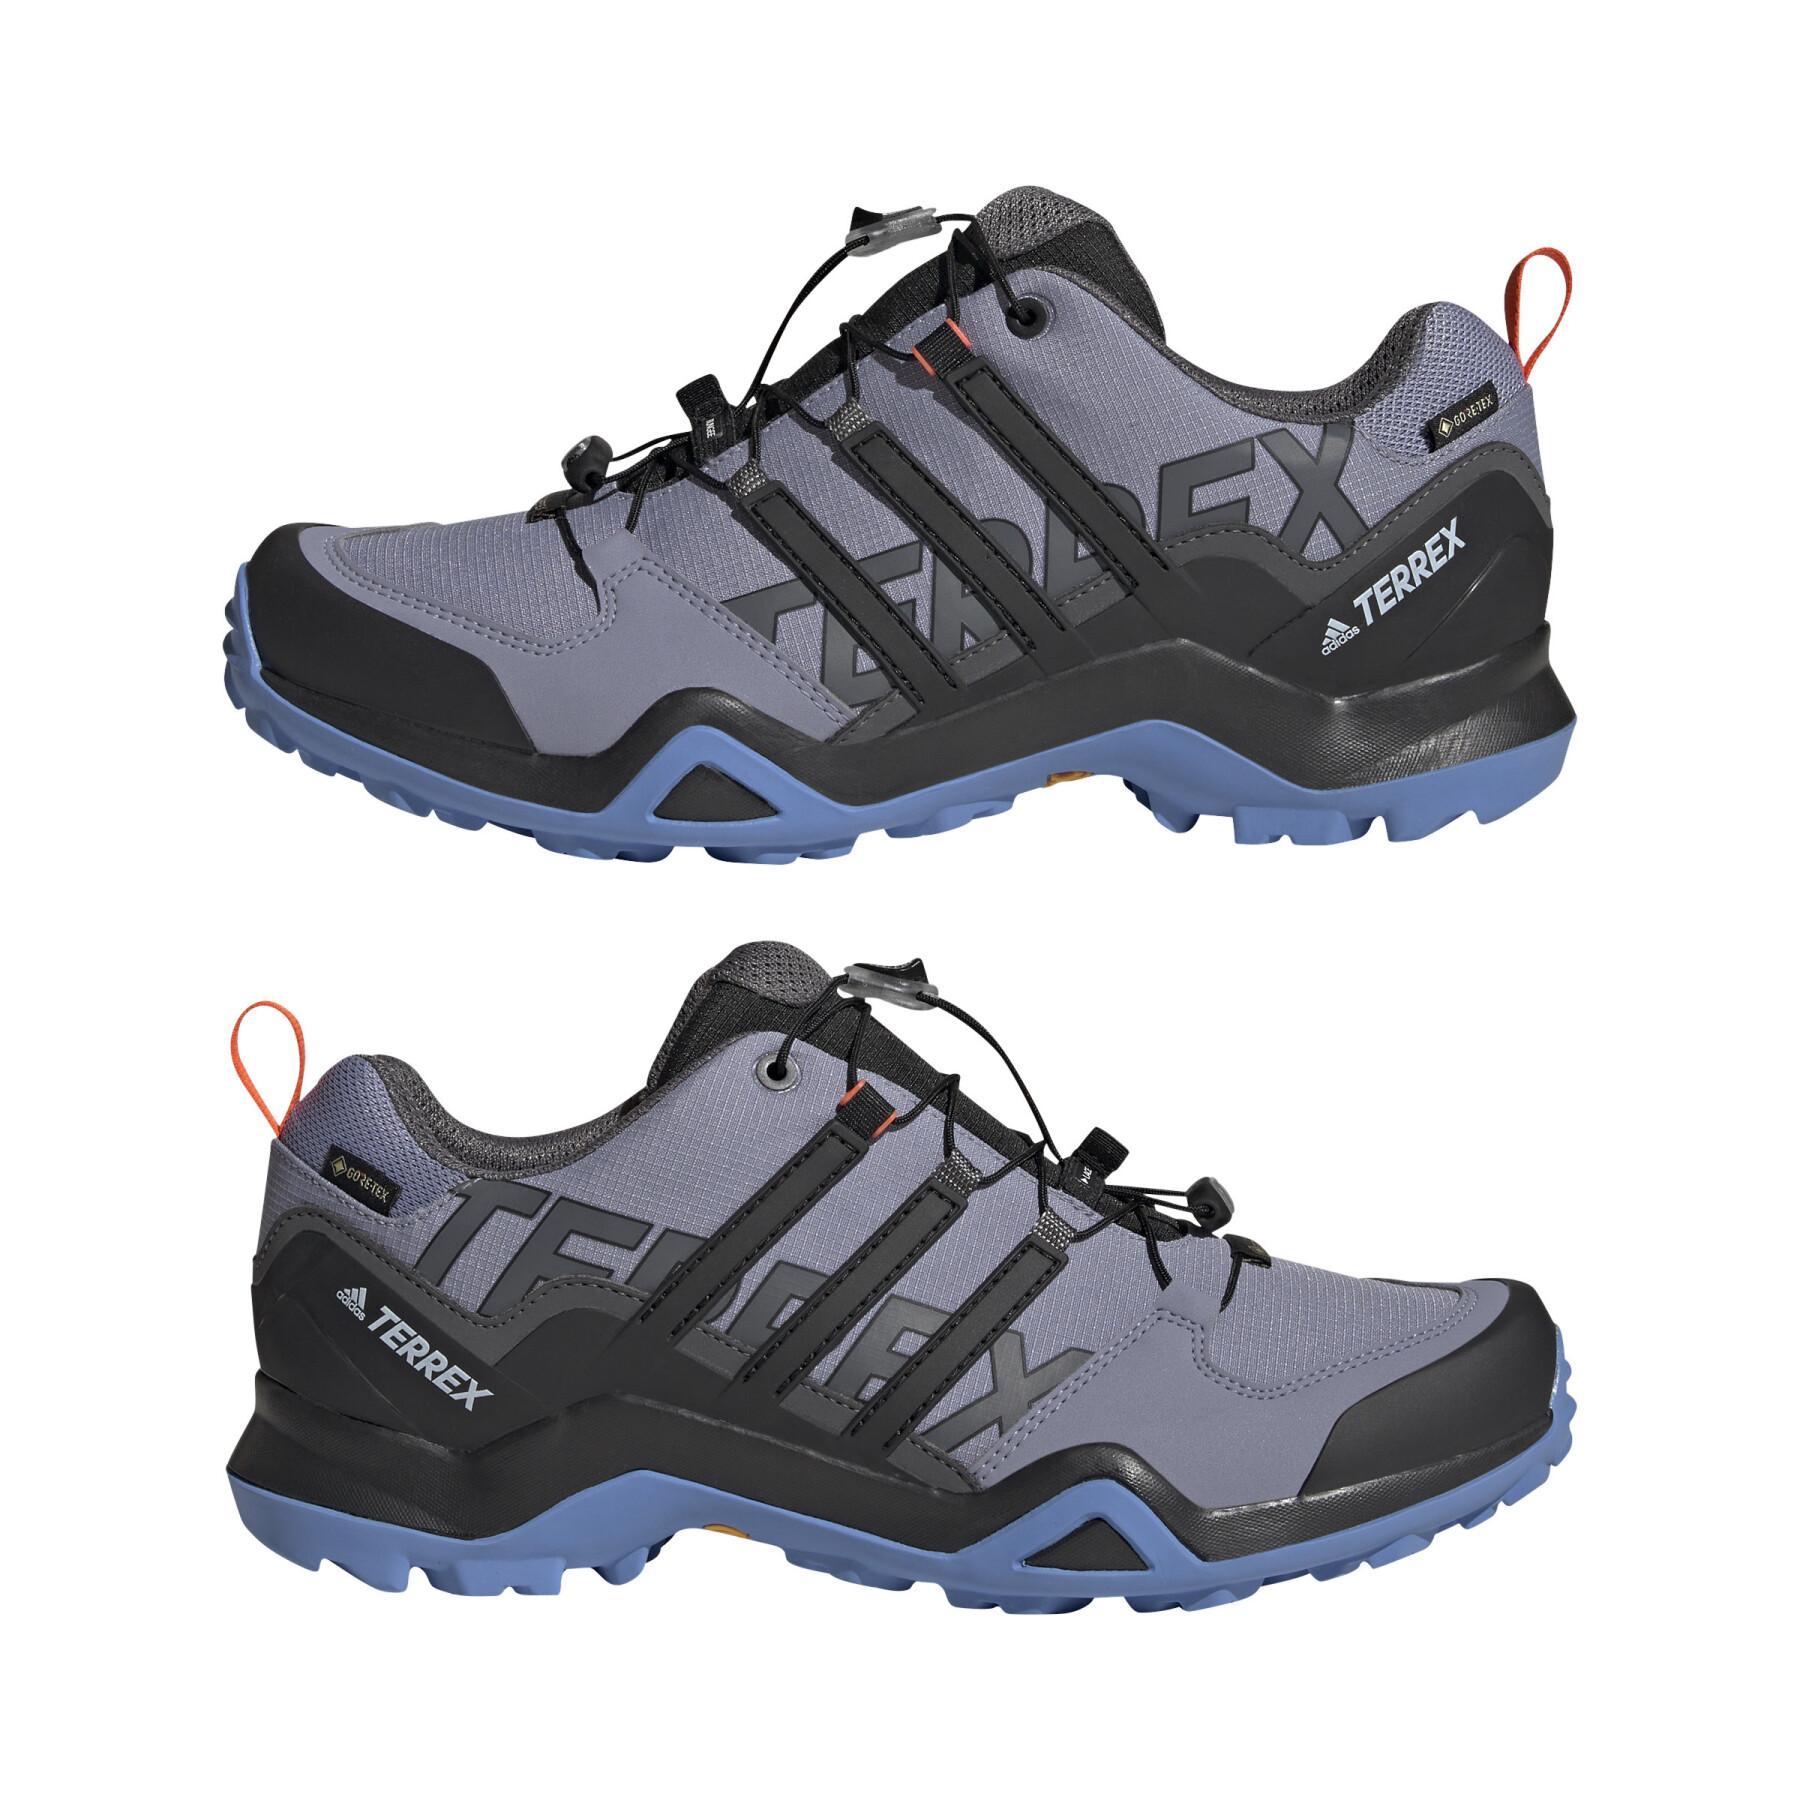 Hiking shoes adidas Terrex Swift R2 GTX